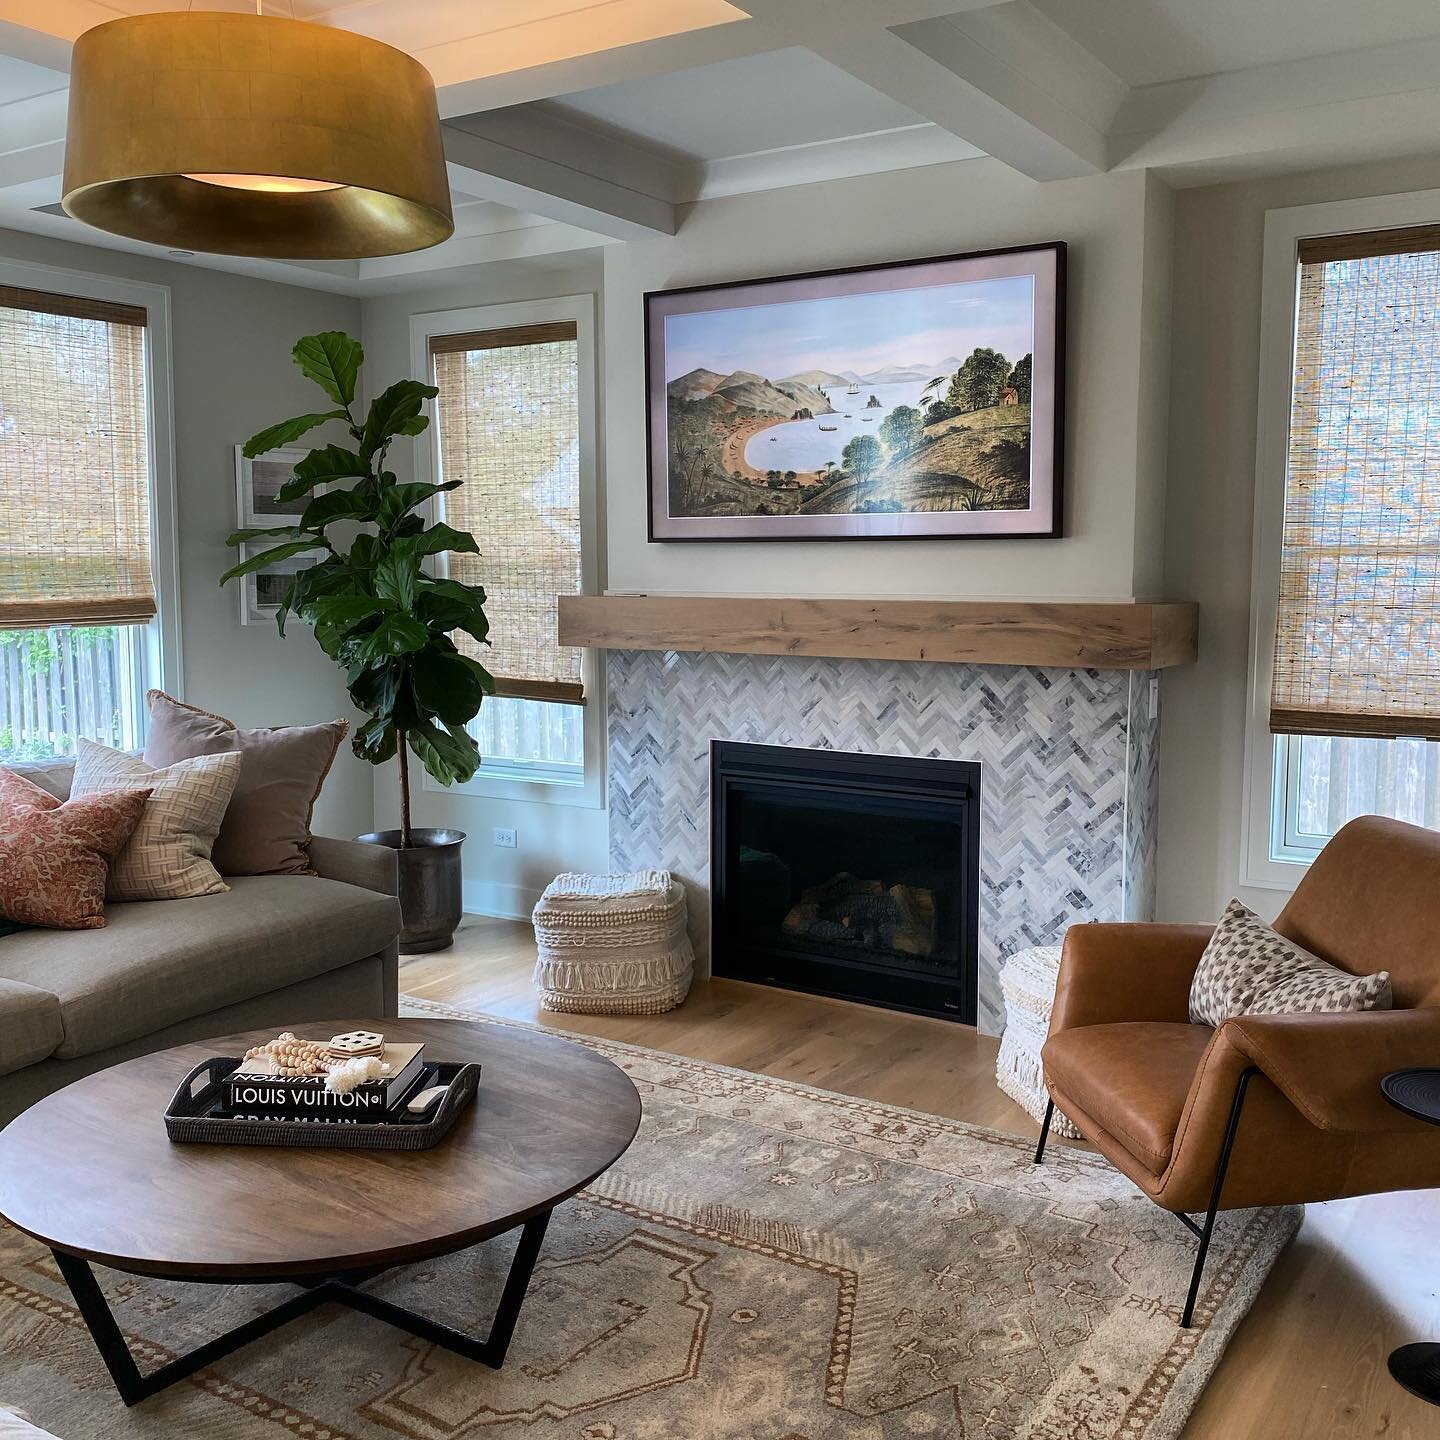 Soft and cozy- livable luxury #interiordesign #residentialdesign #ceilingdesign #chicagointeriordesign #familyroomdecor #fireplace #custombuilt #sopretty😍